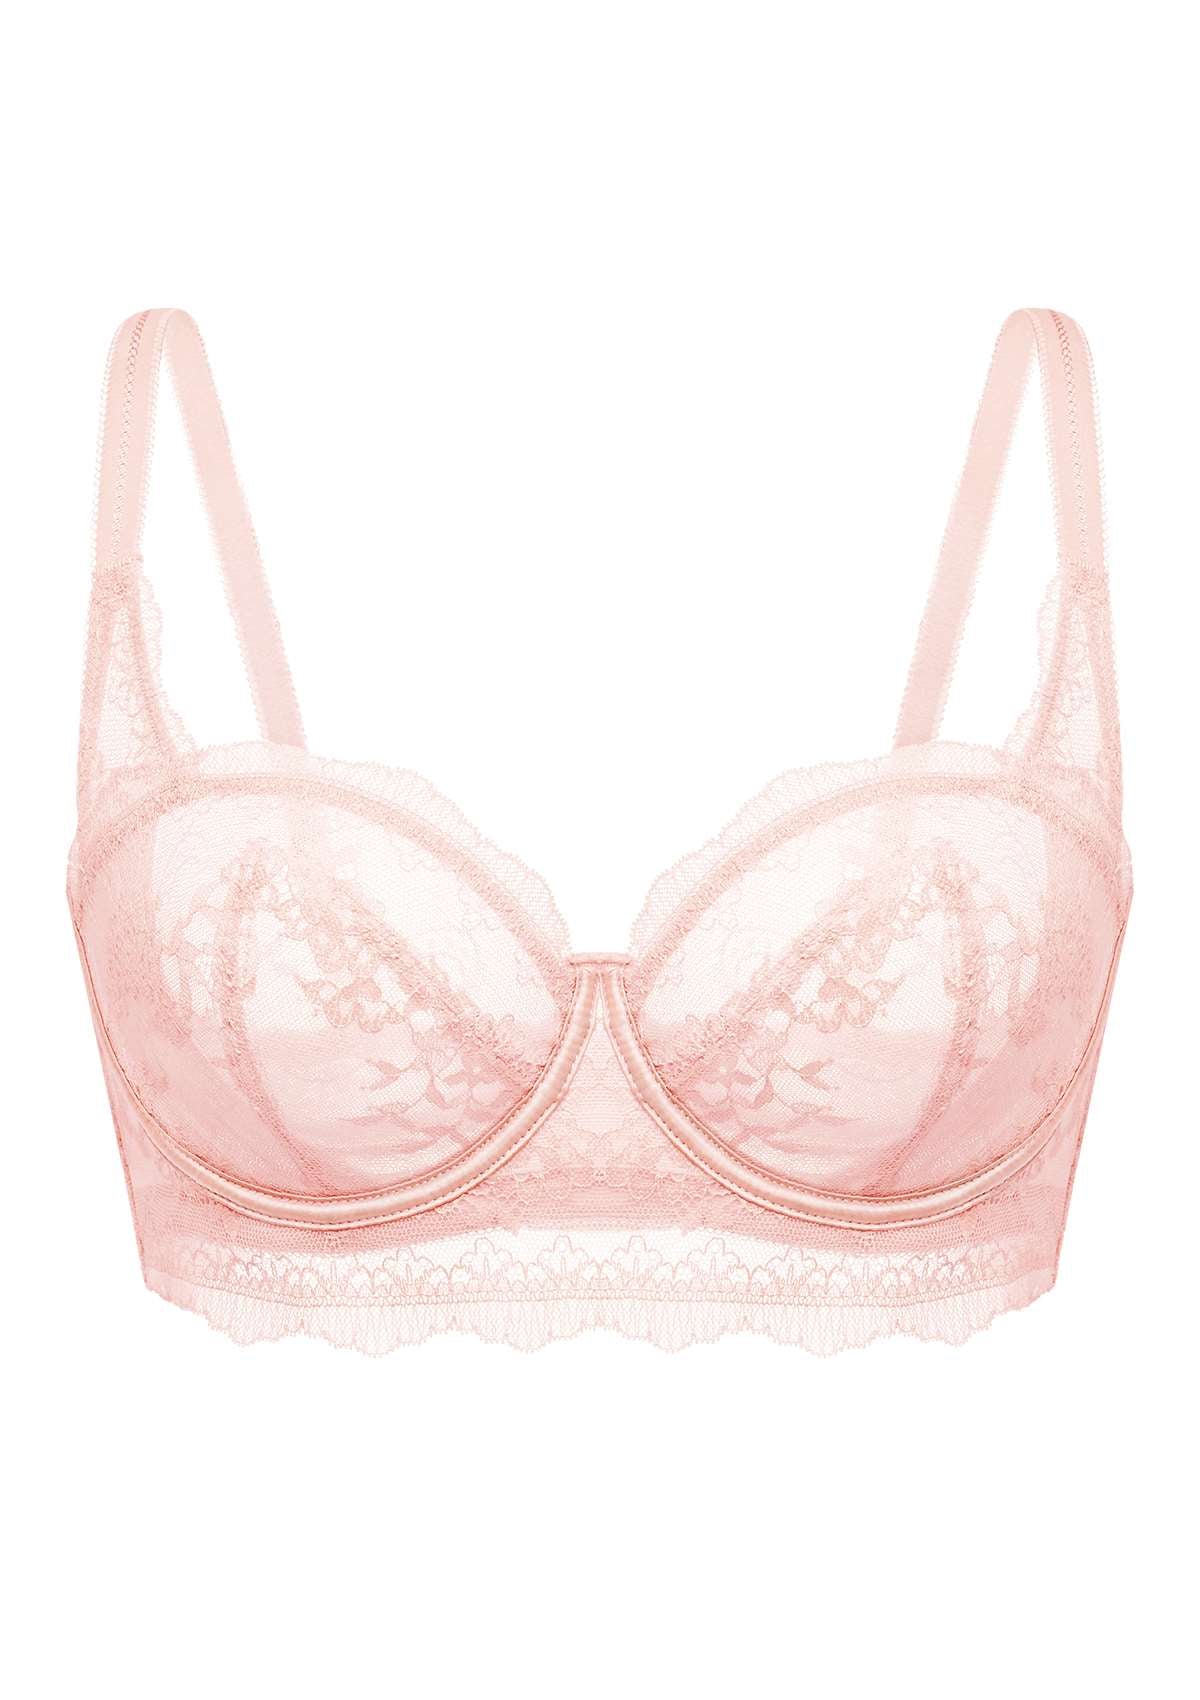 HSIA Floral Lace Unlined Bridal Balconette Delicate Bra Panty Set - Pink / 36 / DD/E